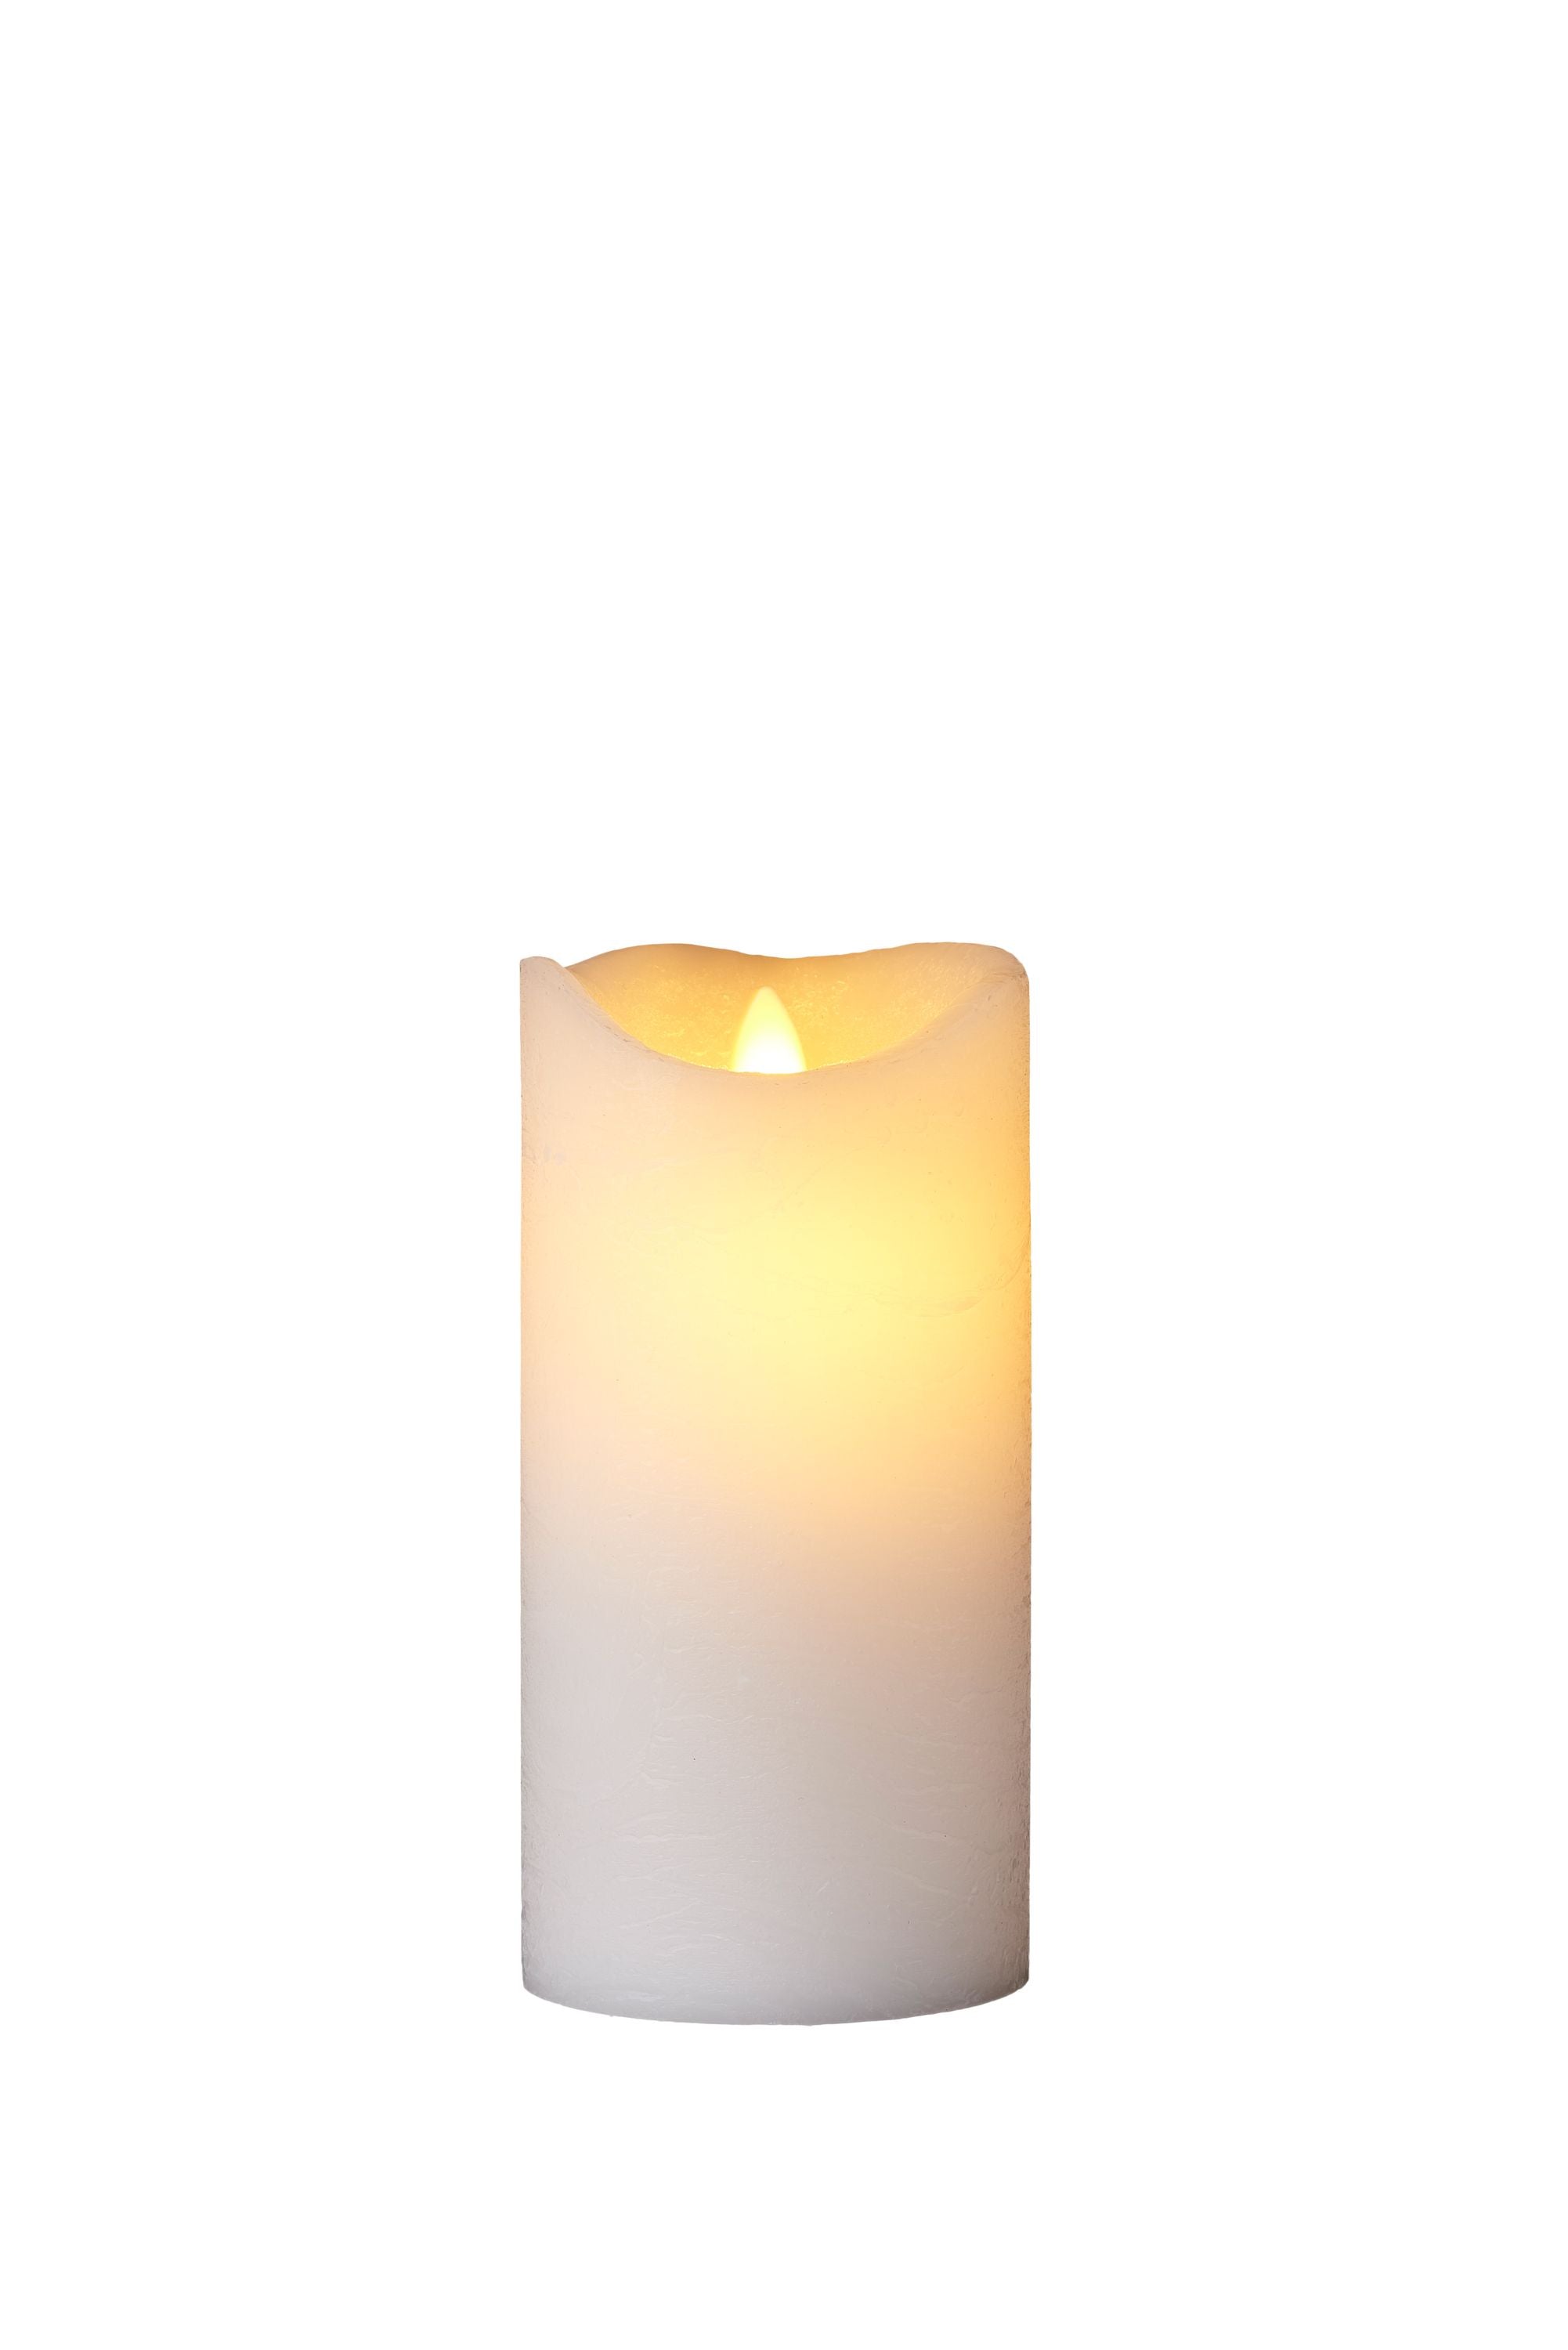 Sirius Sara Exclusive LED Candle Ø7,5XH15CM, White